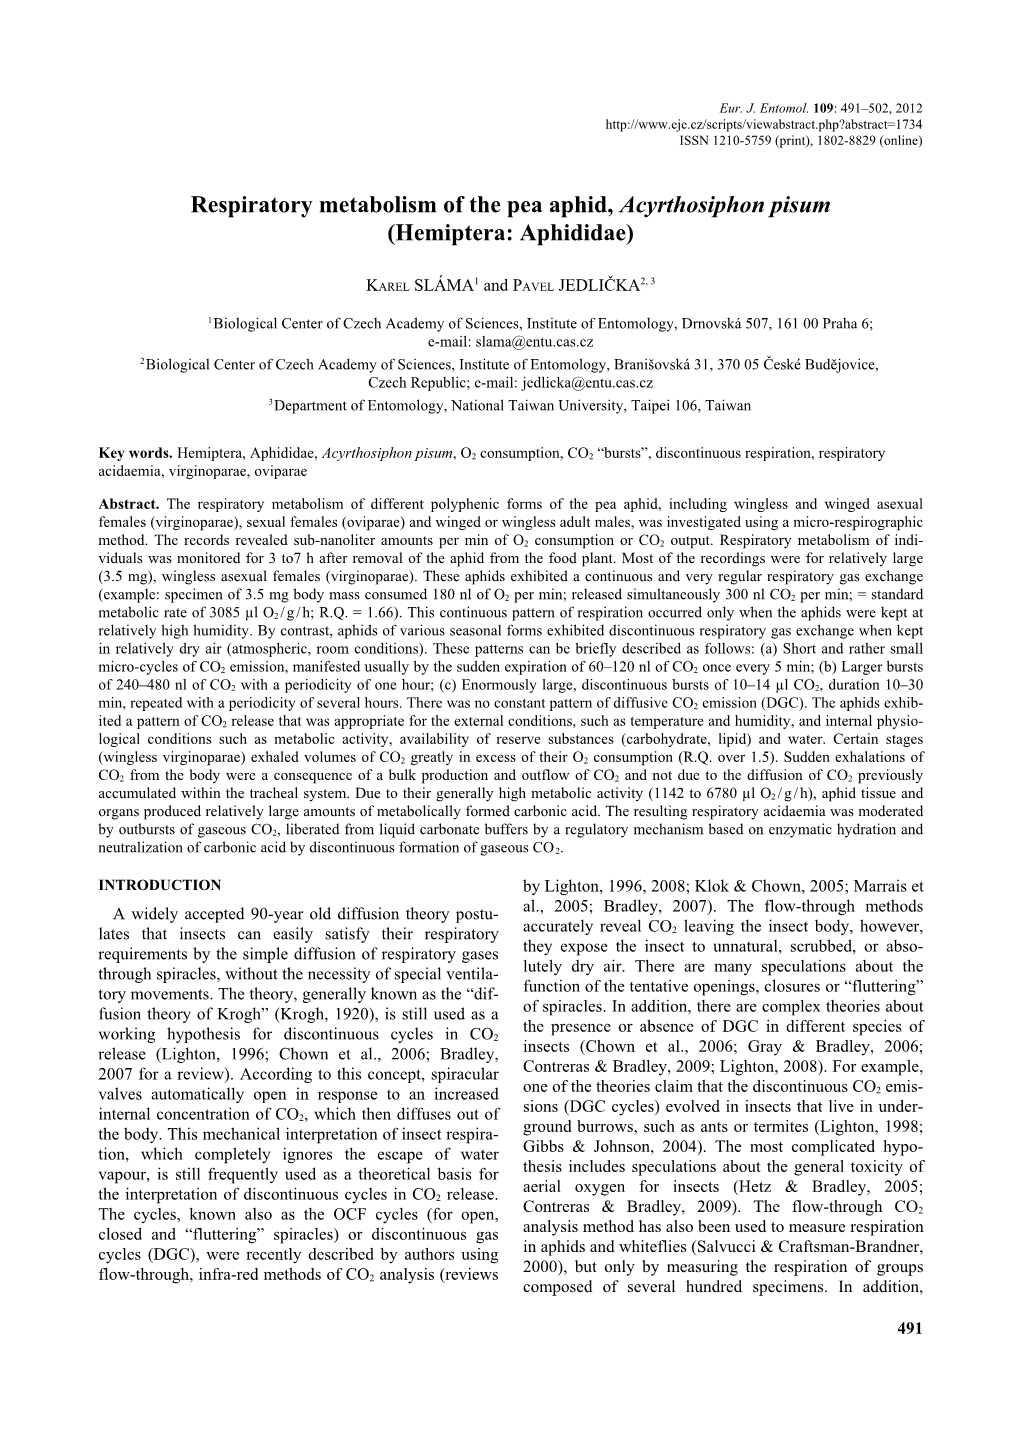 Respiratory Metabolism of the Pea Aphid, Acyrthosiphon Pisum (Hemiptera: Aphididae)